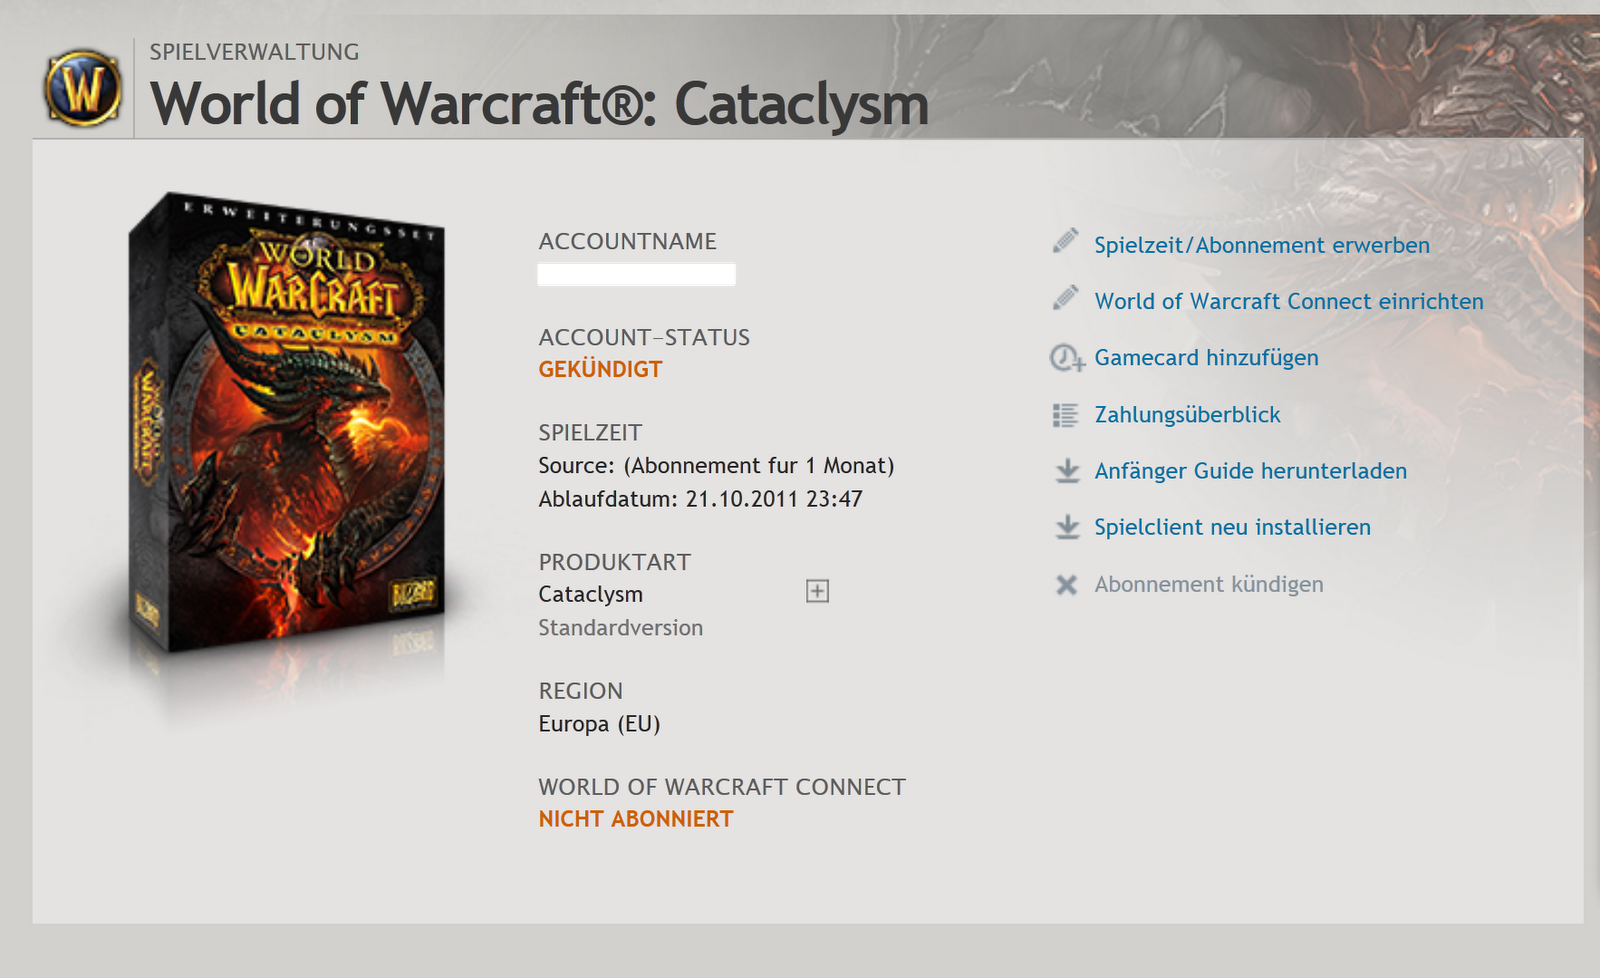 Купить подписку warcraft. Подписка wow. World of Warcraft подписка. Карта World of Warcraft Cataclysm. Подписка ворлд оф варкрафт.